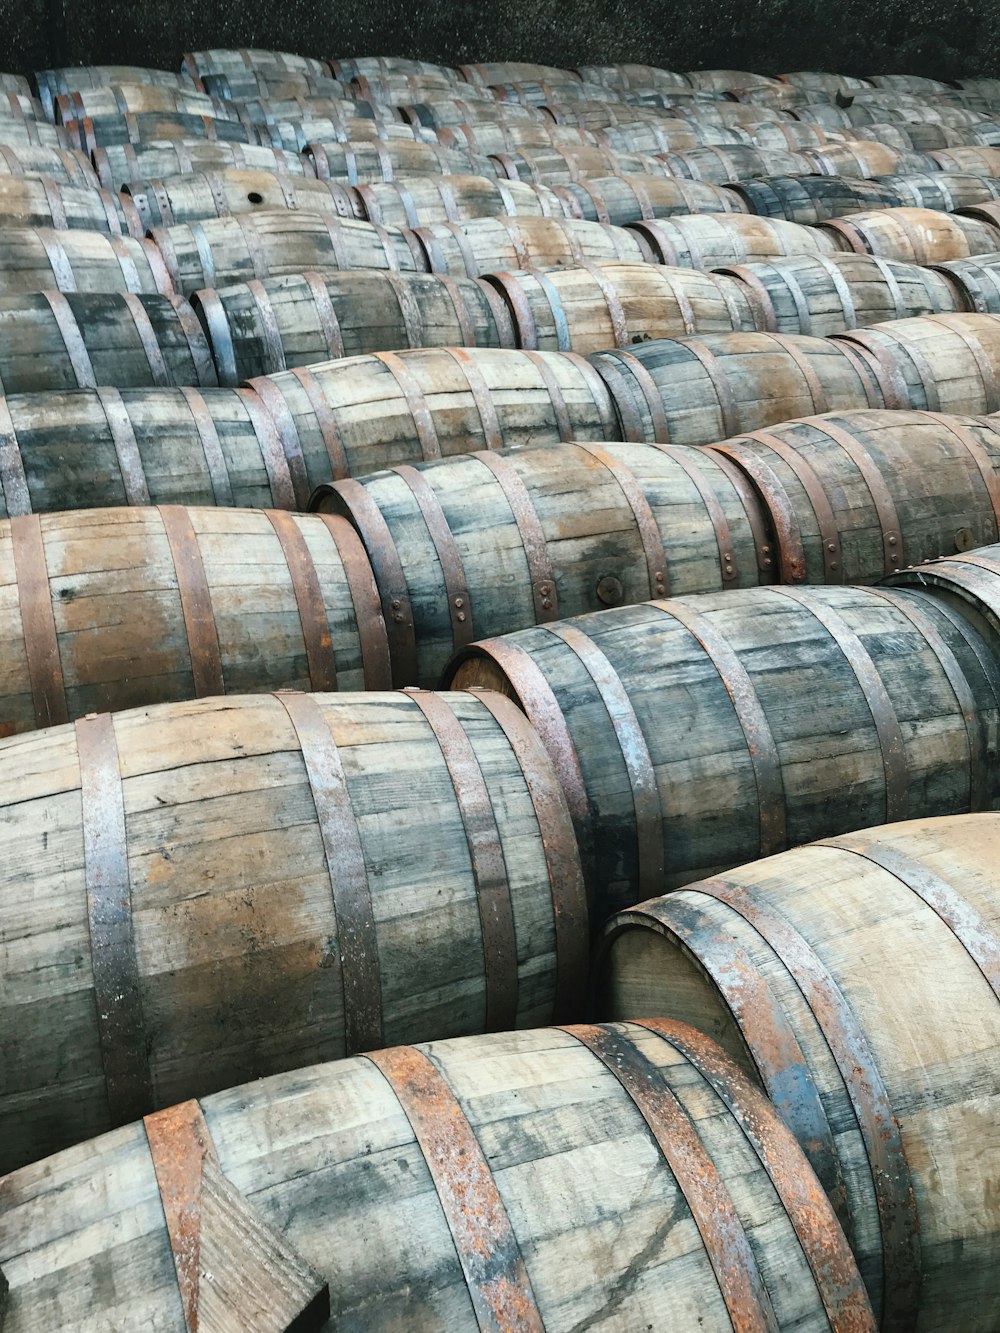 brown wooden barrels